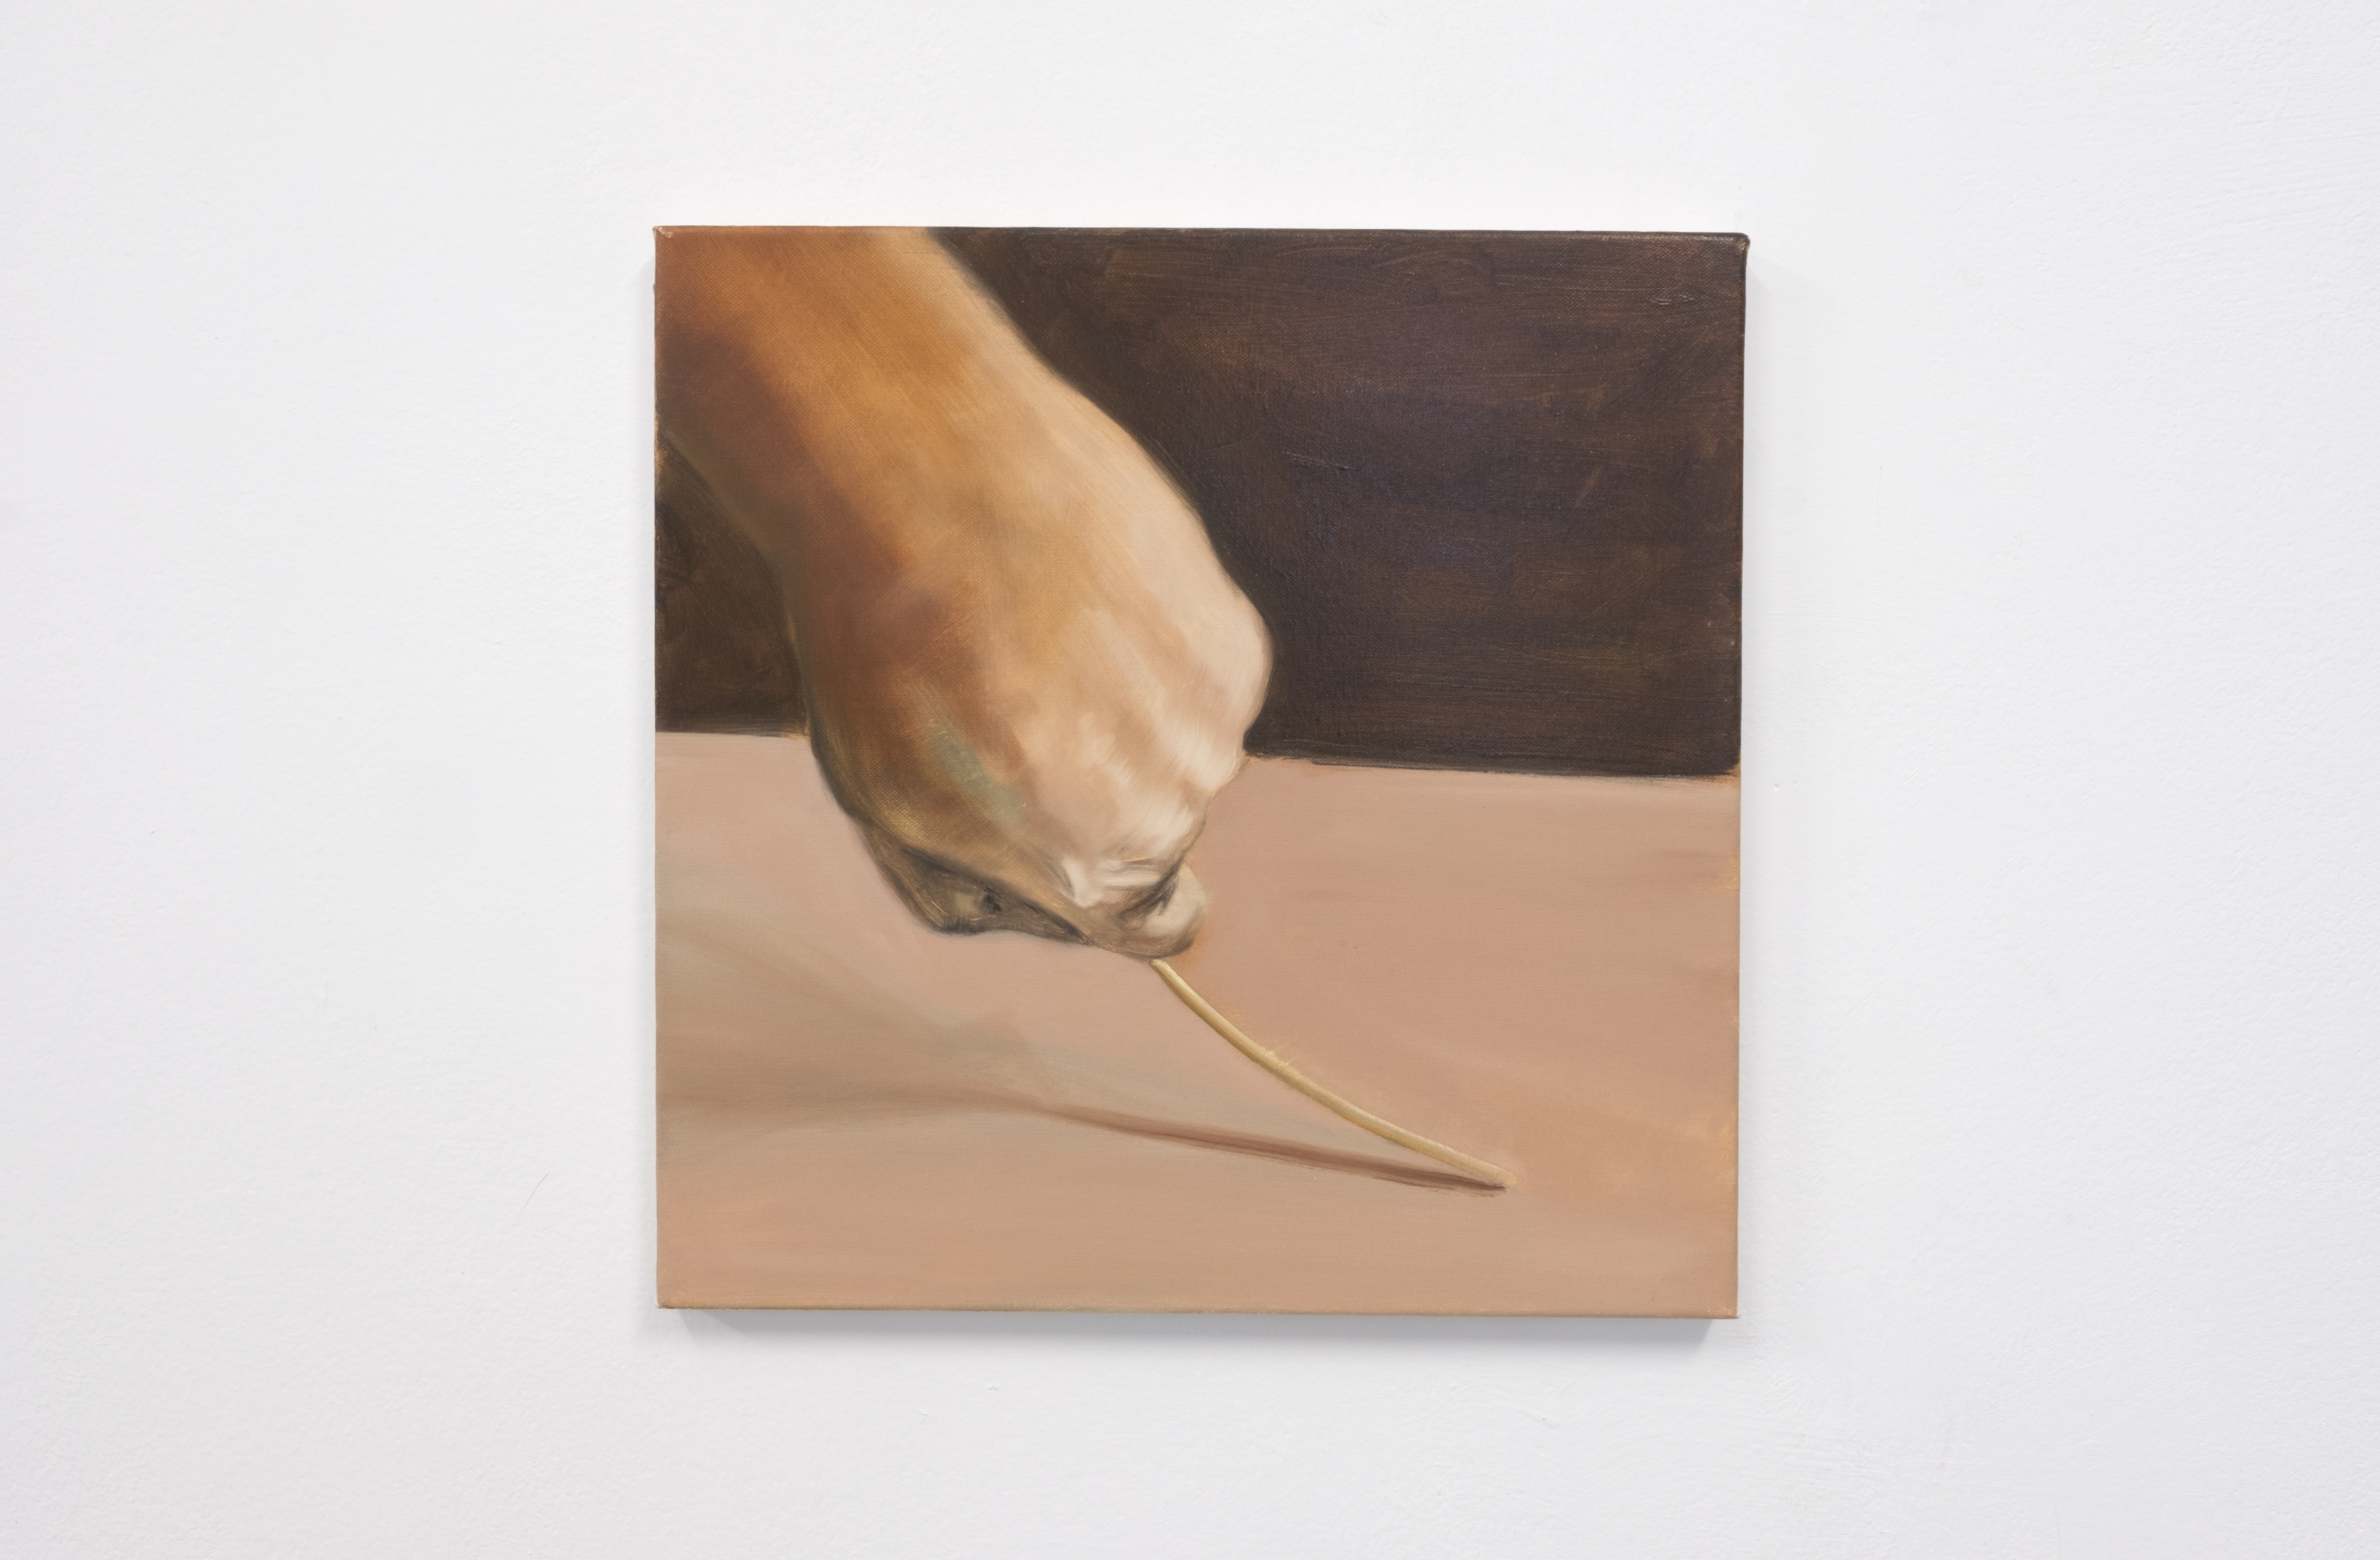 Installationsansicht Curved Arrows, Nikos Kanarelis "the breaking point" oil on canvas, 2016